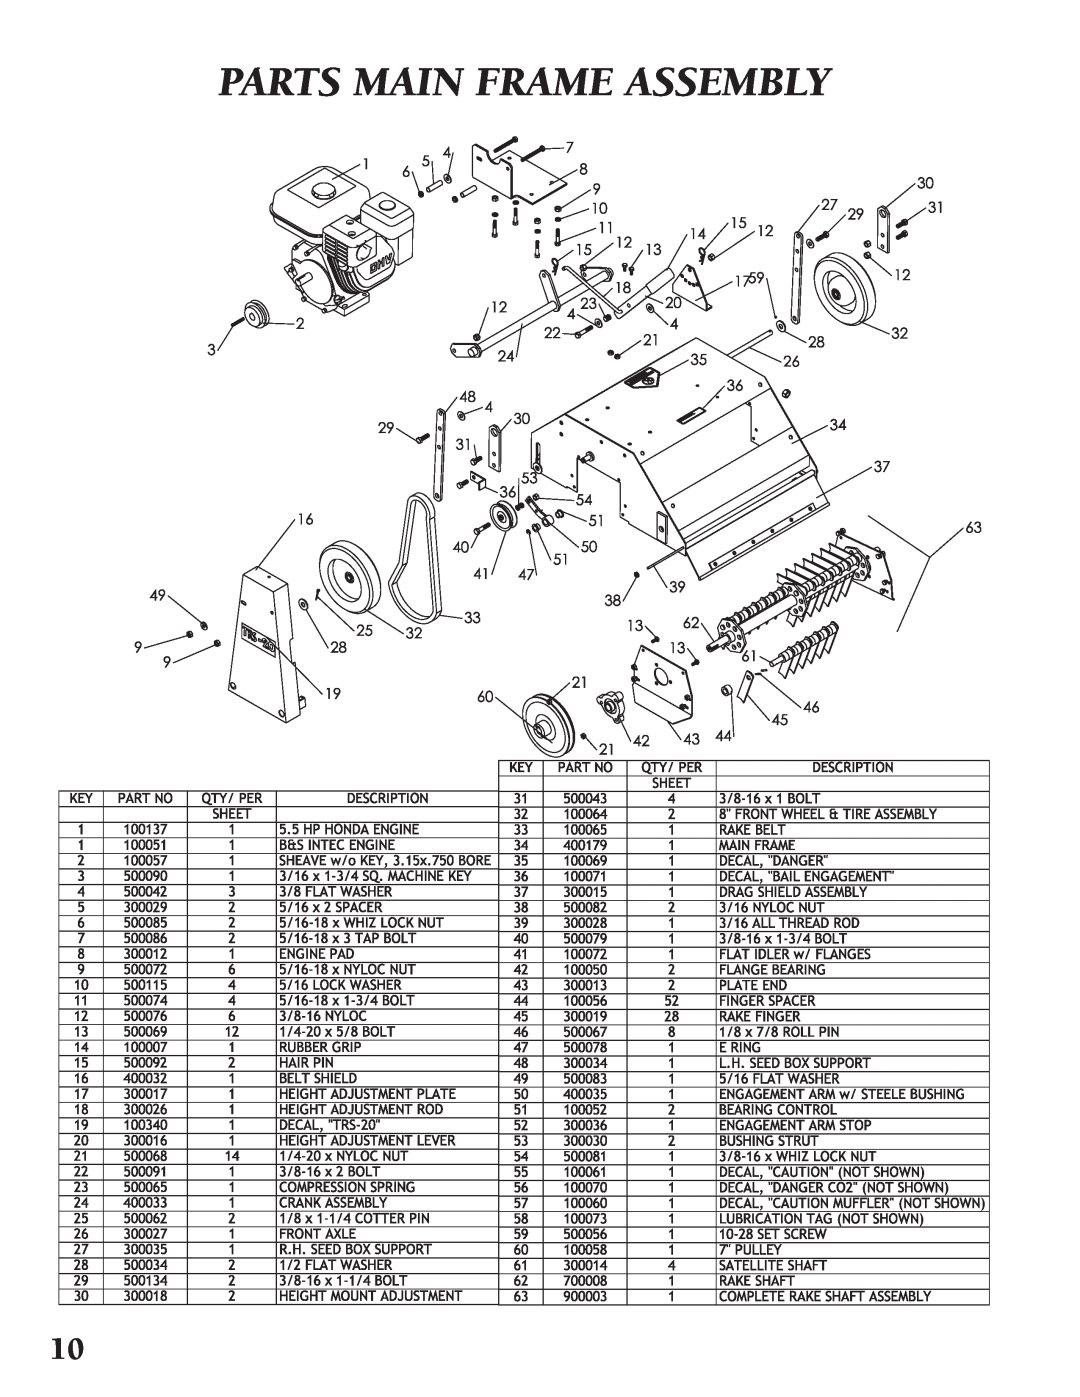 Little Wonder TRS-20, TSS-20 manual Parts Main Frame Assembly 